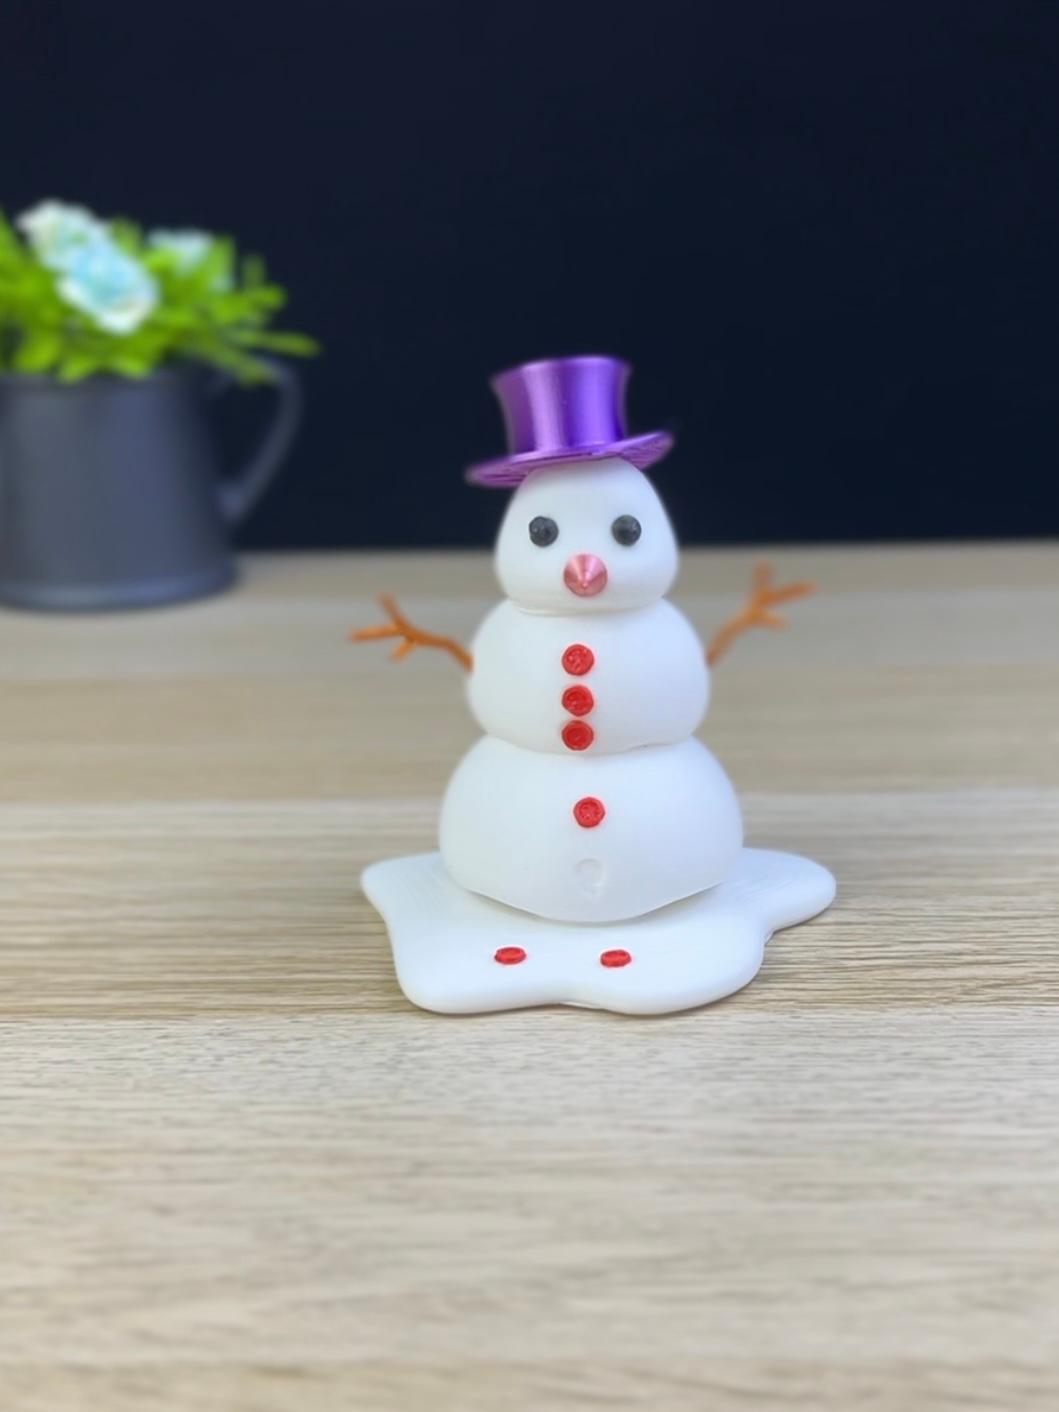 Melting snowman  3d model